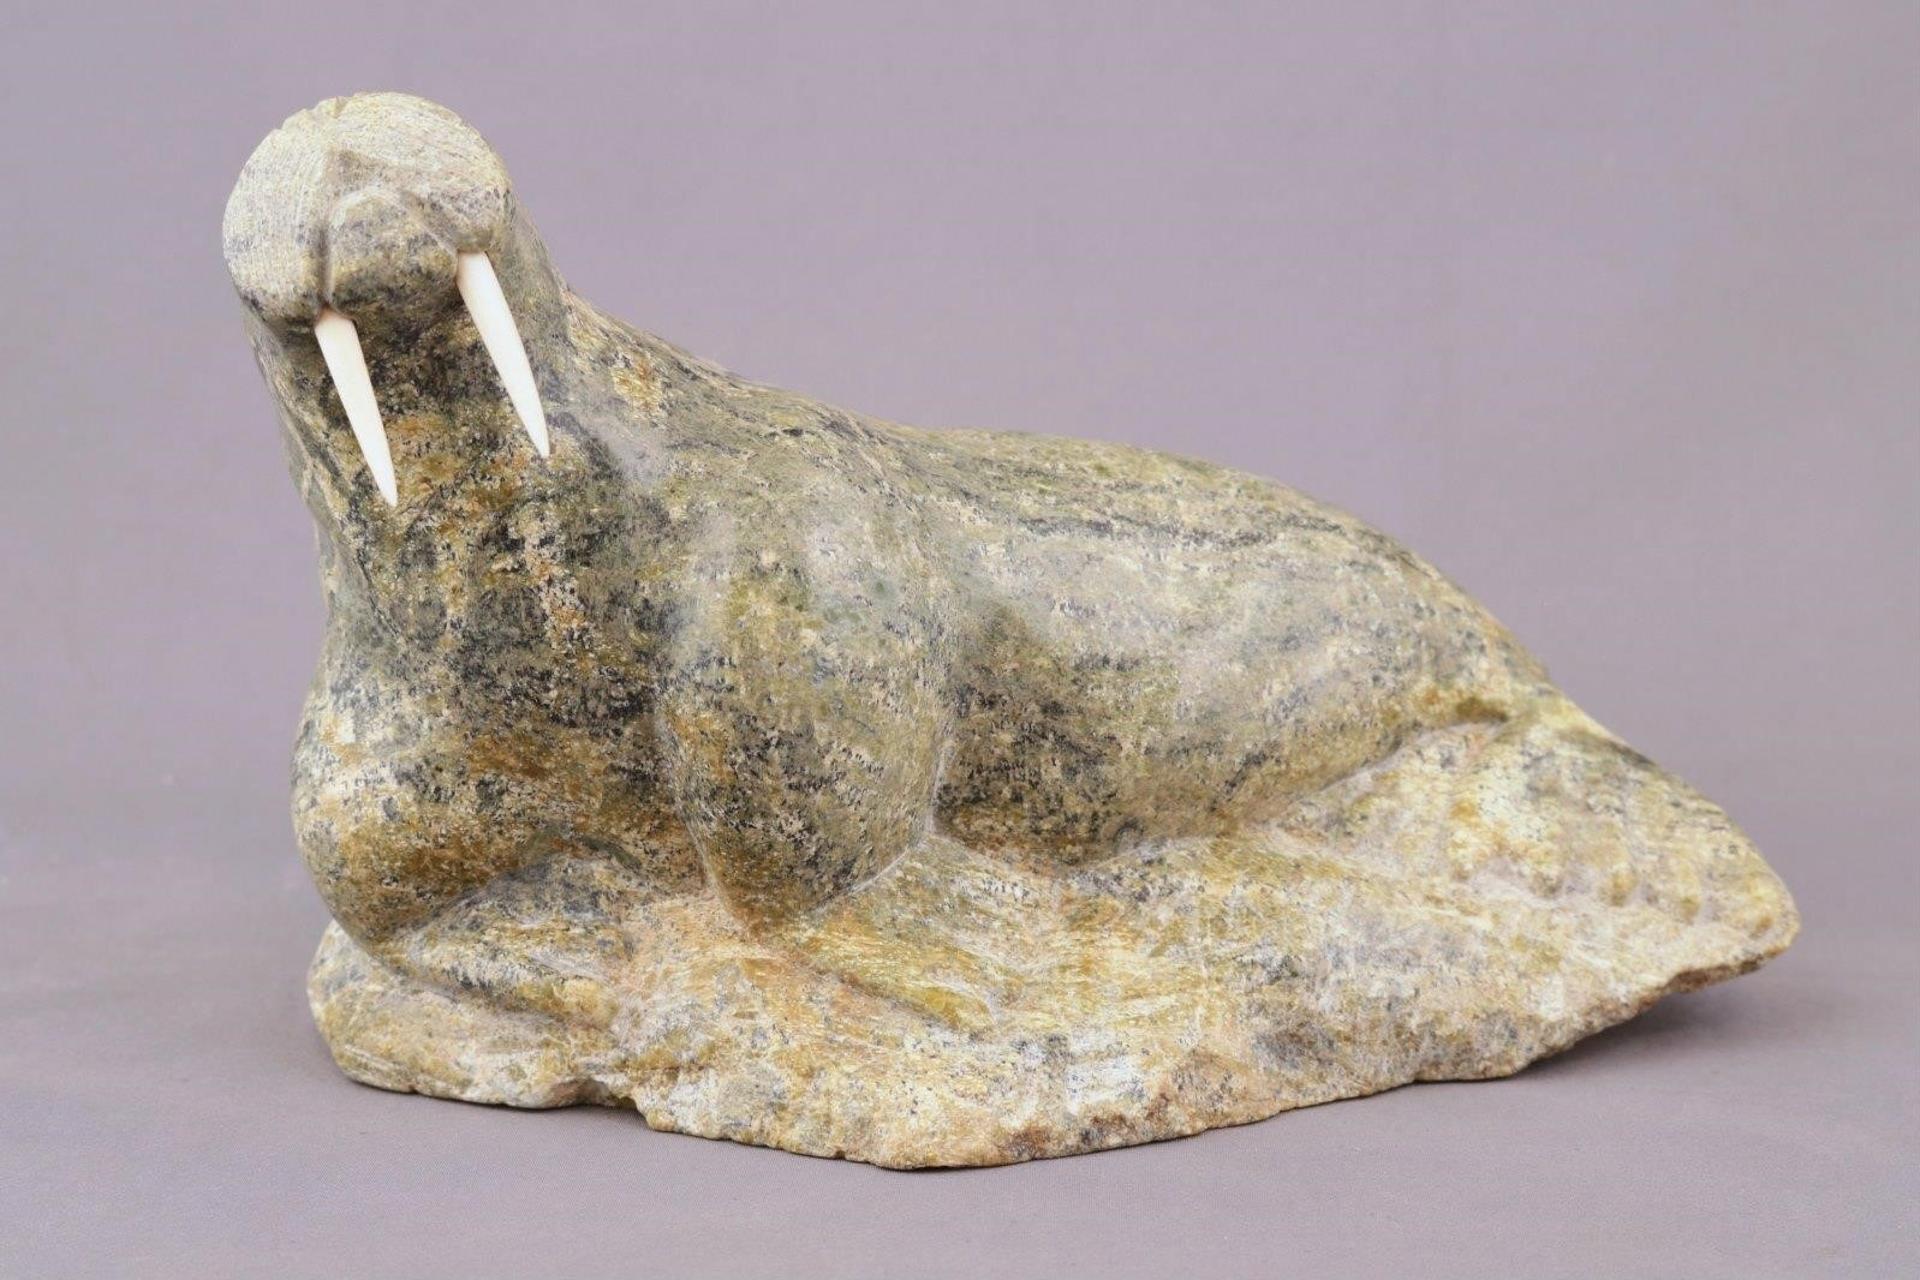 Simeeonie Killiktee (1973) - a serpentine carving of a Walrus